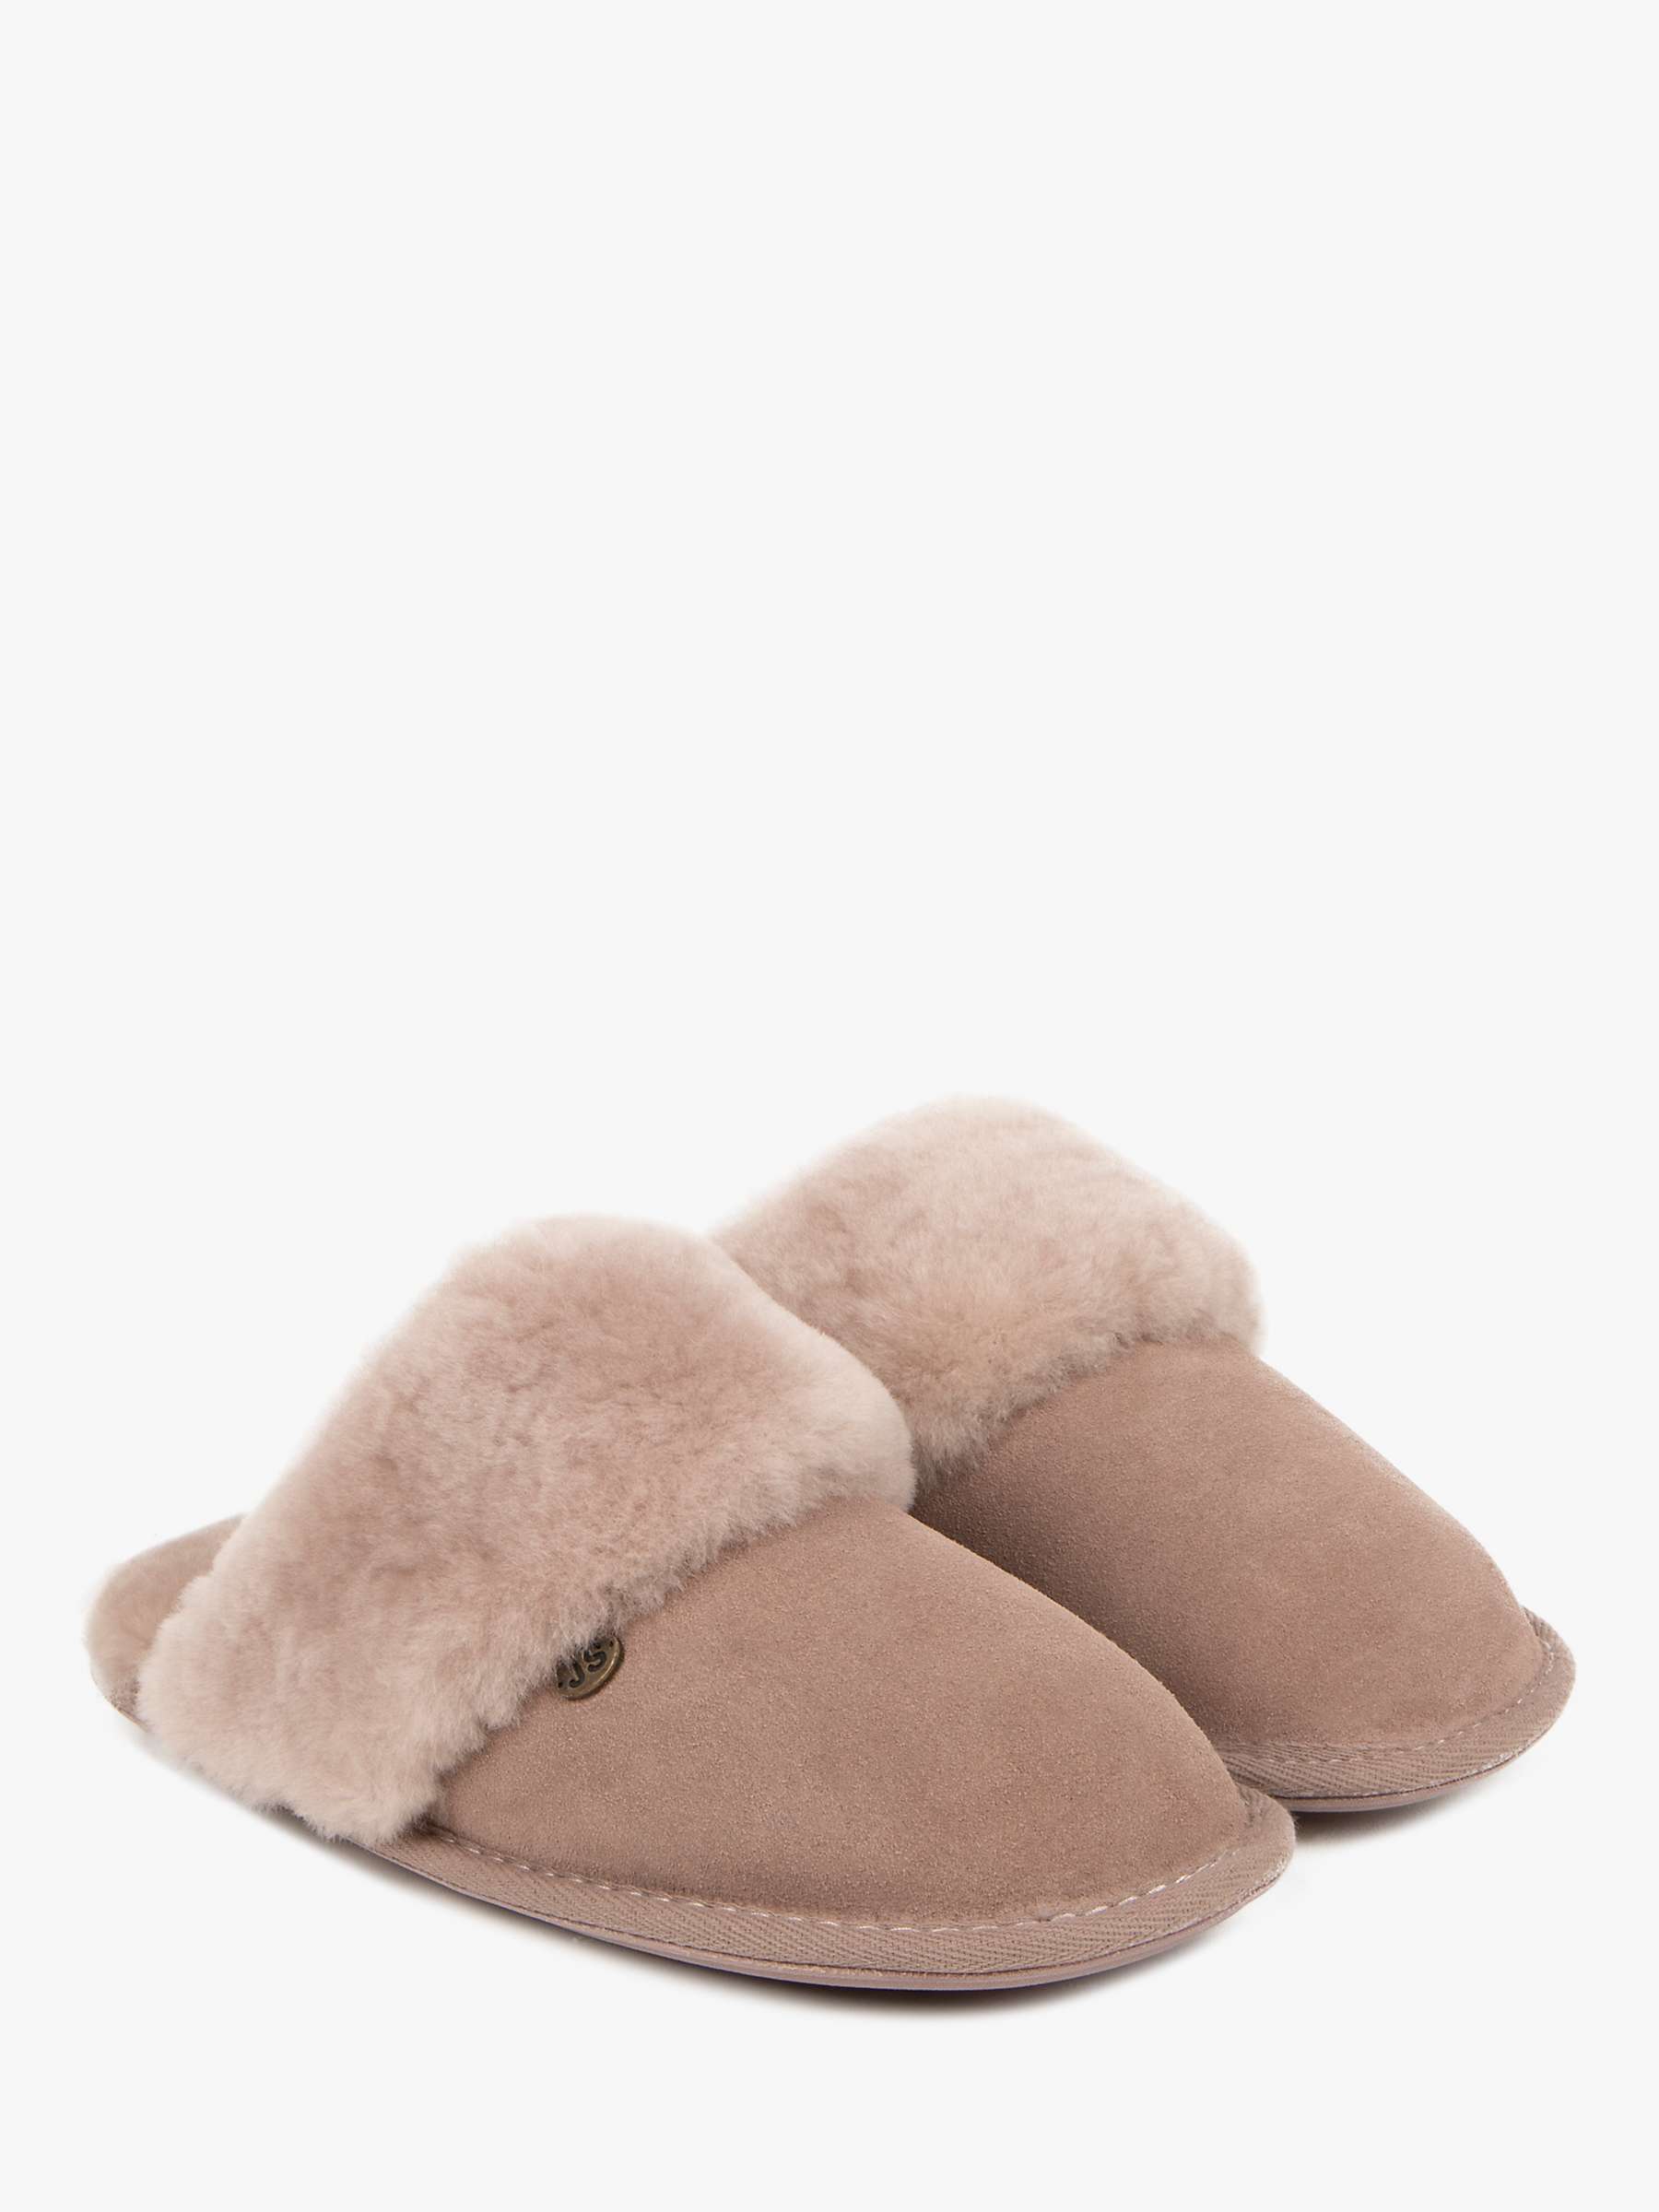 Buy Just Sheepskin Duchess Mule Slippers Online at johnlewis.com